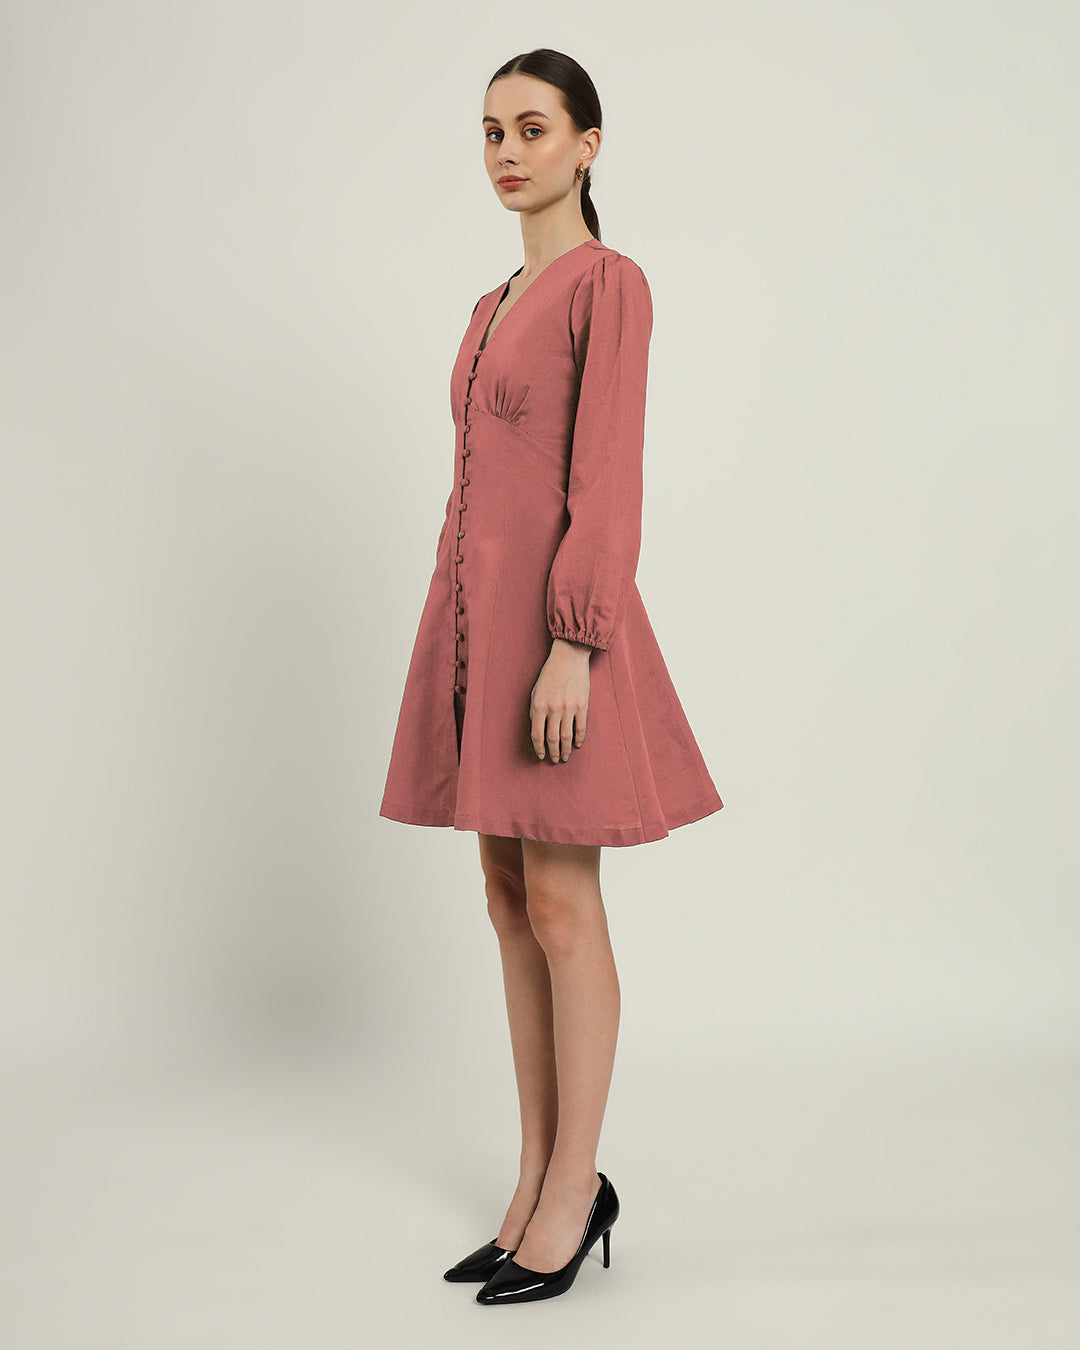 The Dafni Ivory Pink Cotton Dress